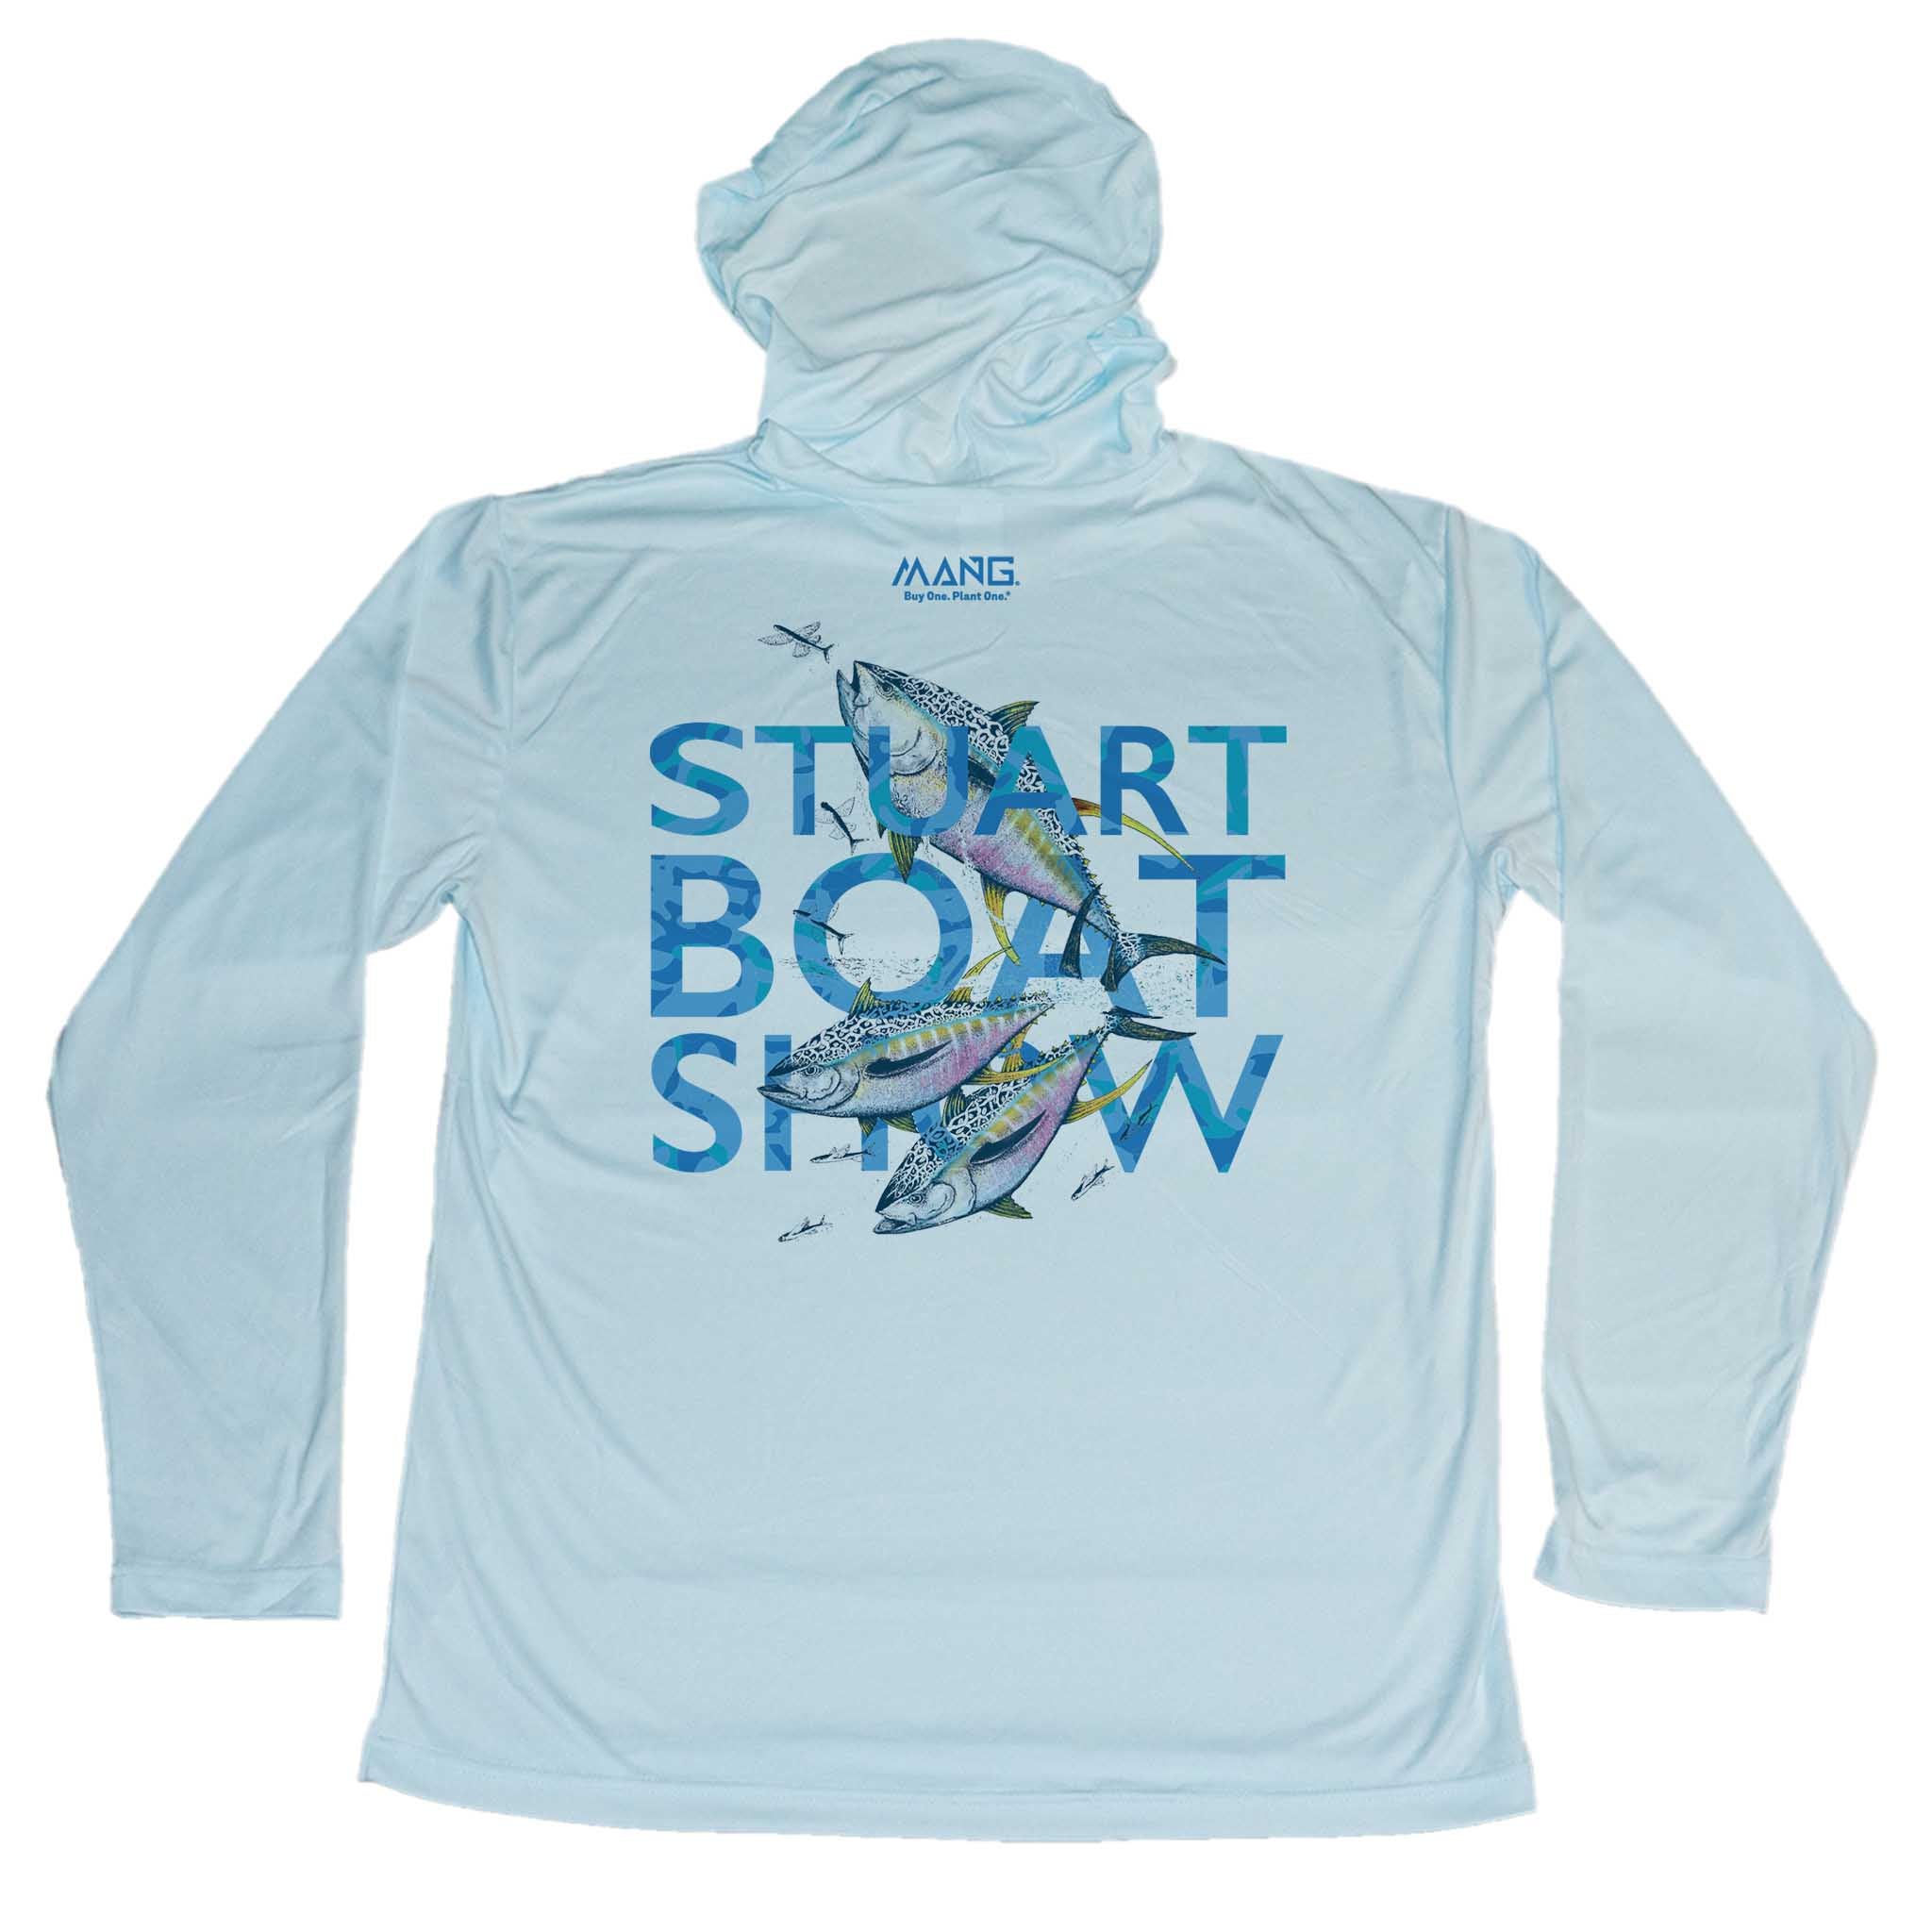 MANG Stuart Boat Show 50th Anniversary Hoodie - XS-Arctic Blue